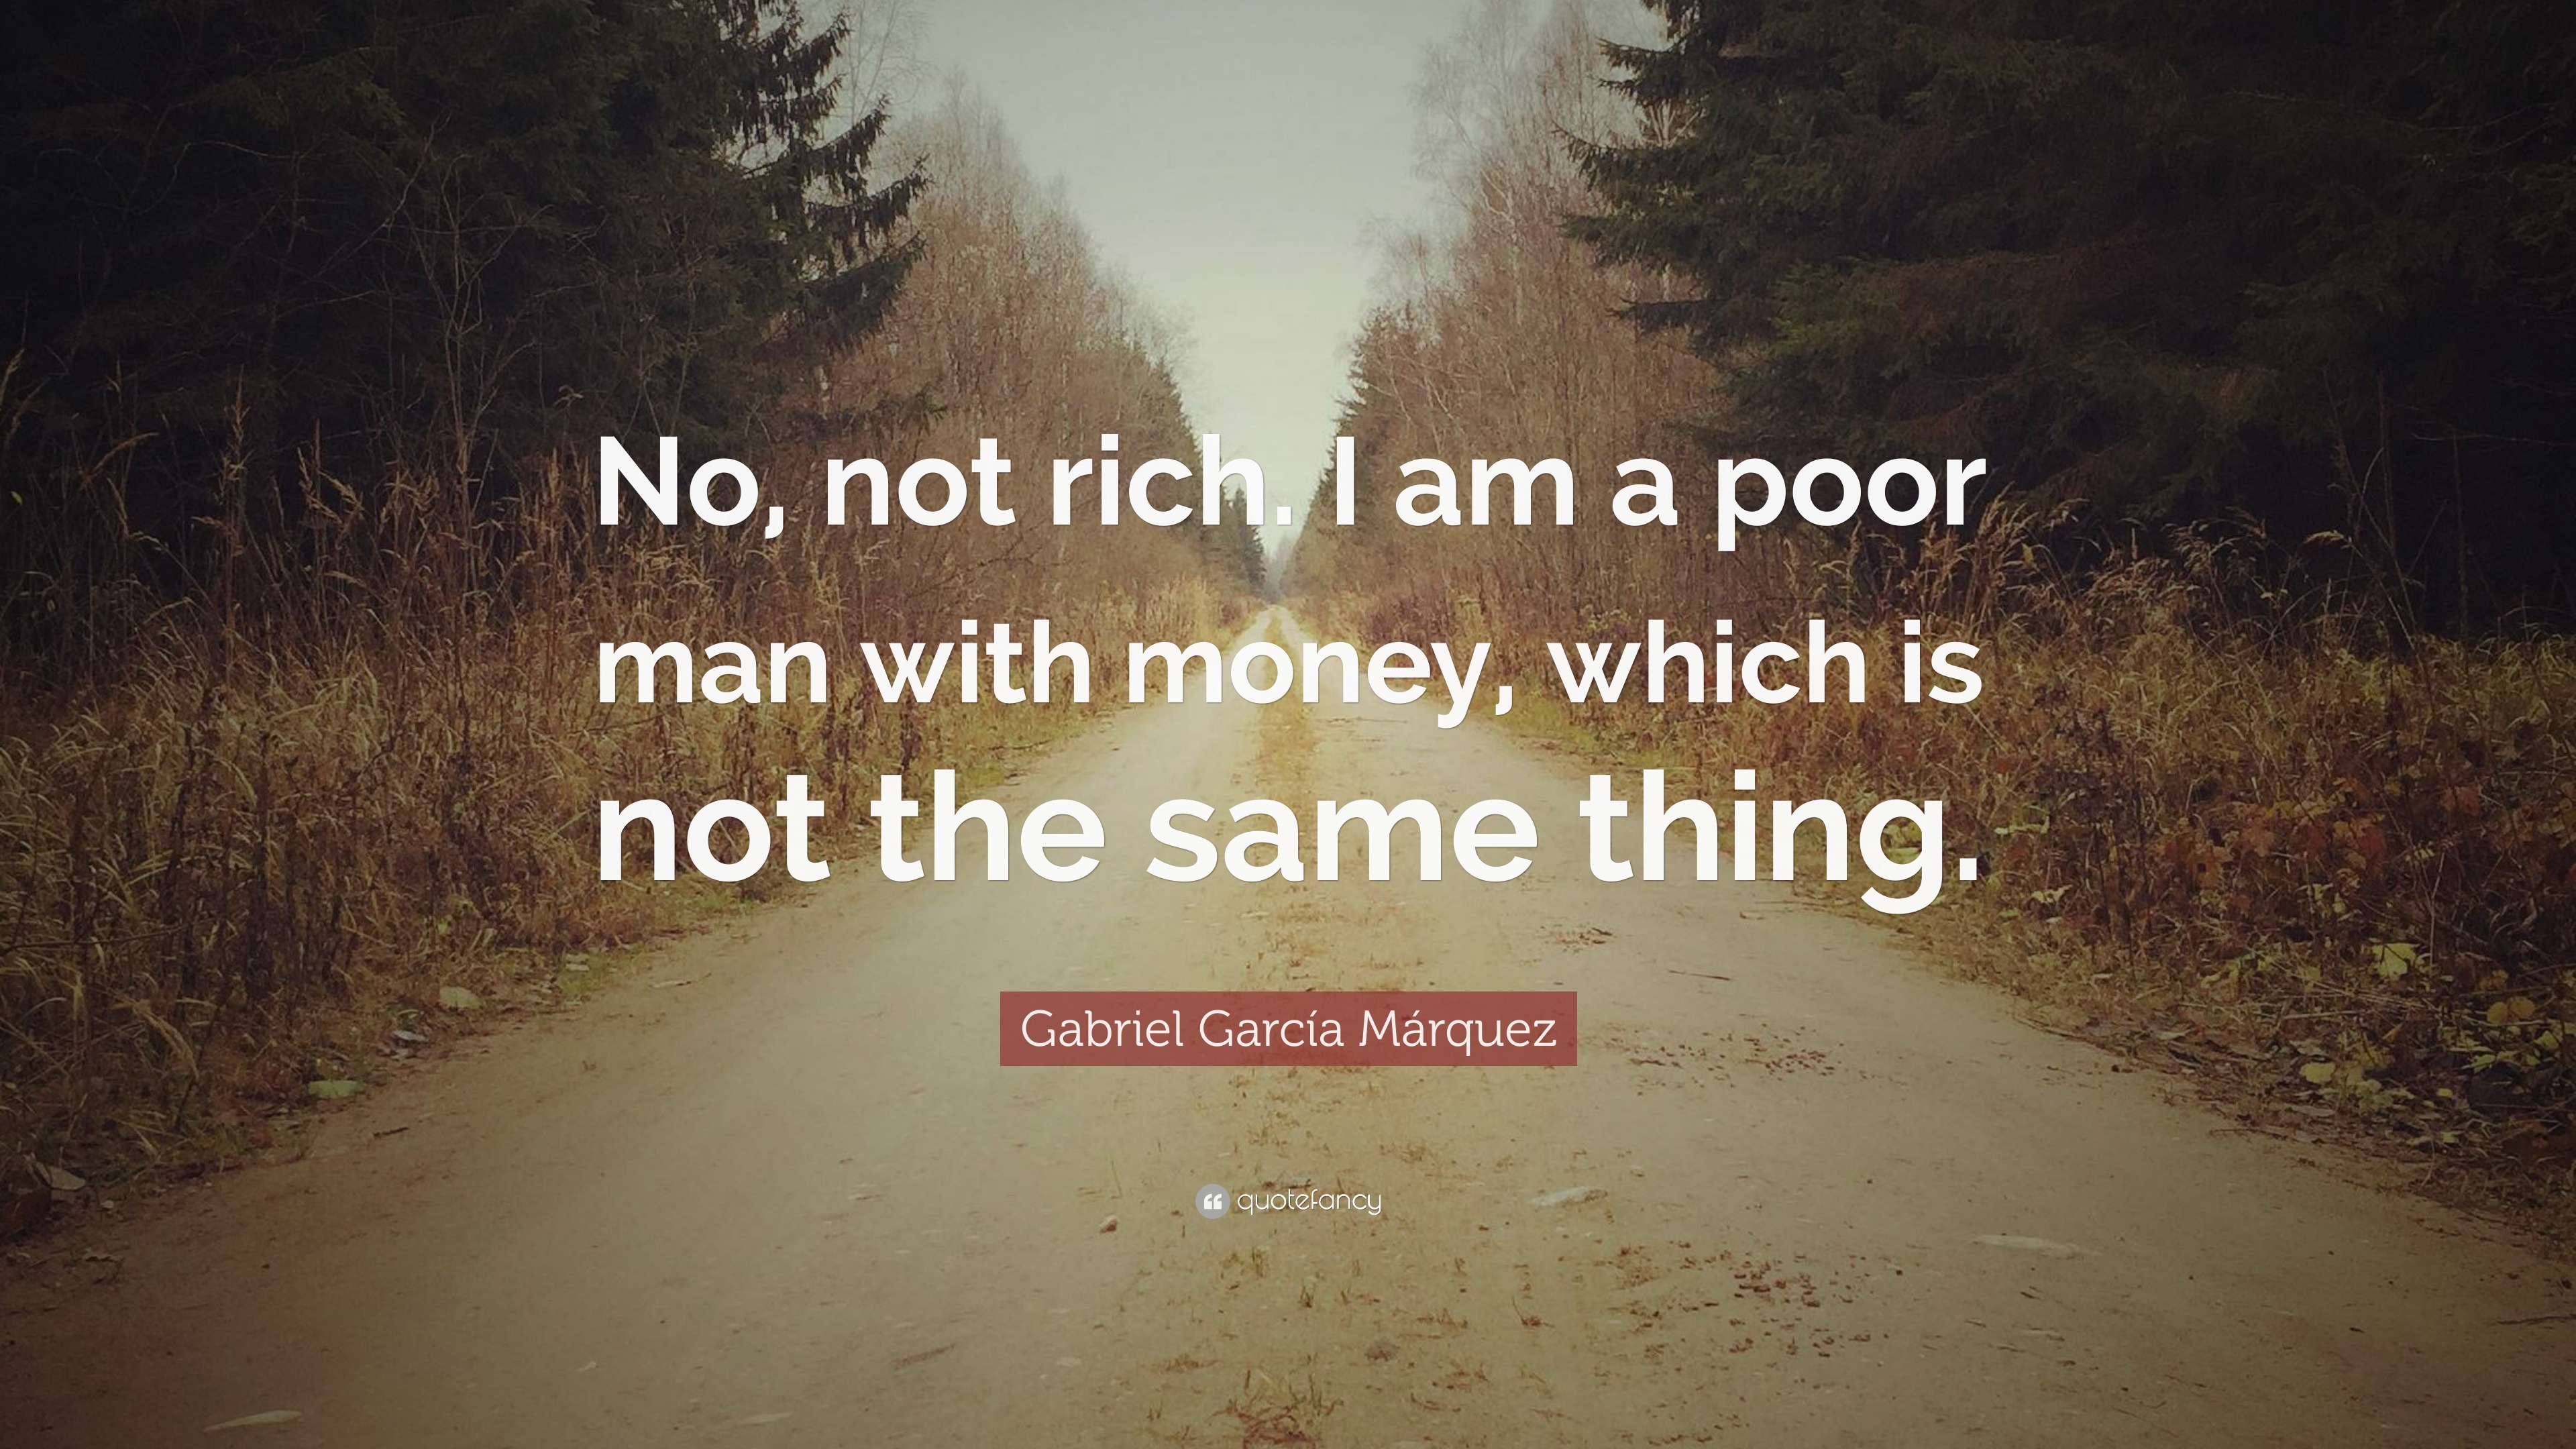 Gabriel Garc­a Márquez Quote “No not rich I am a poor man